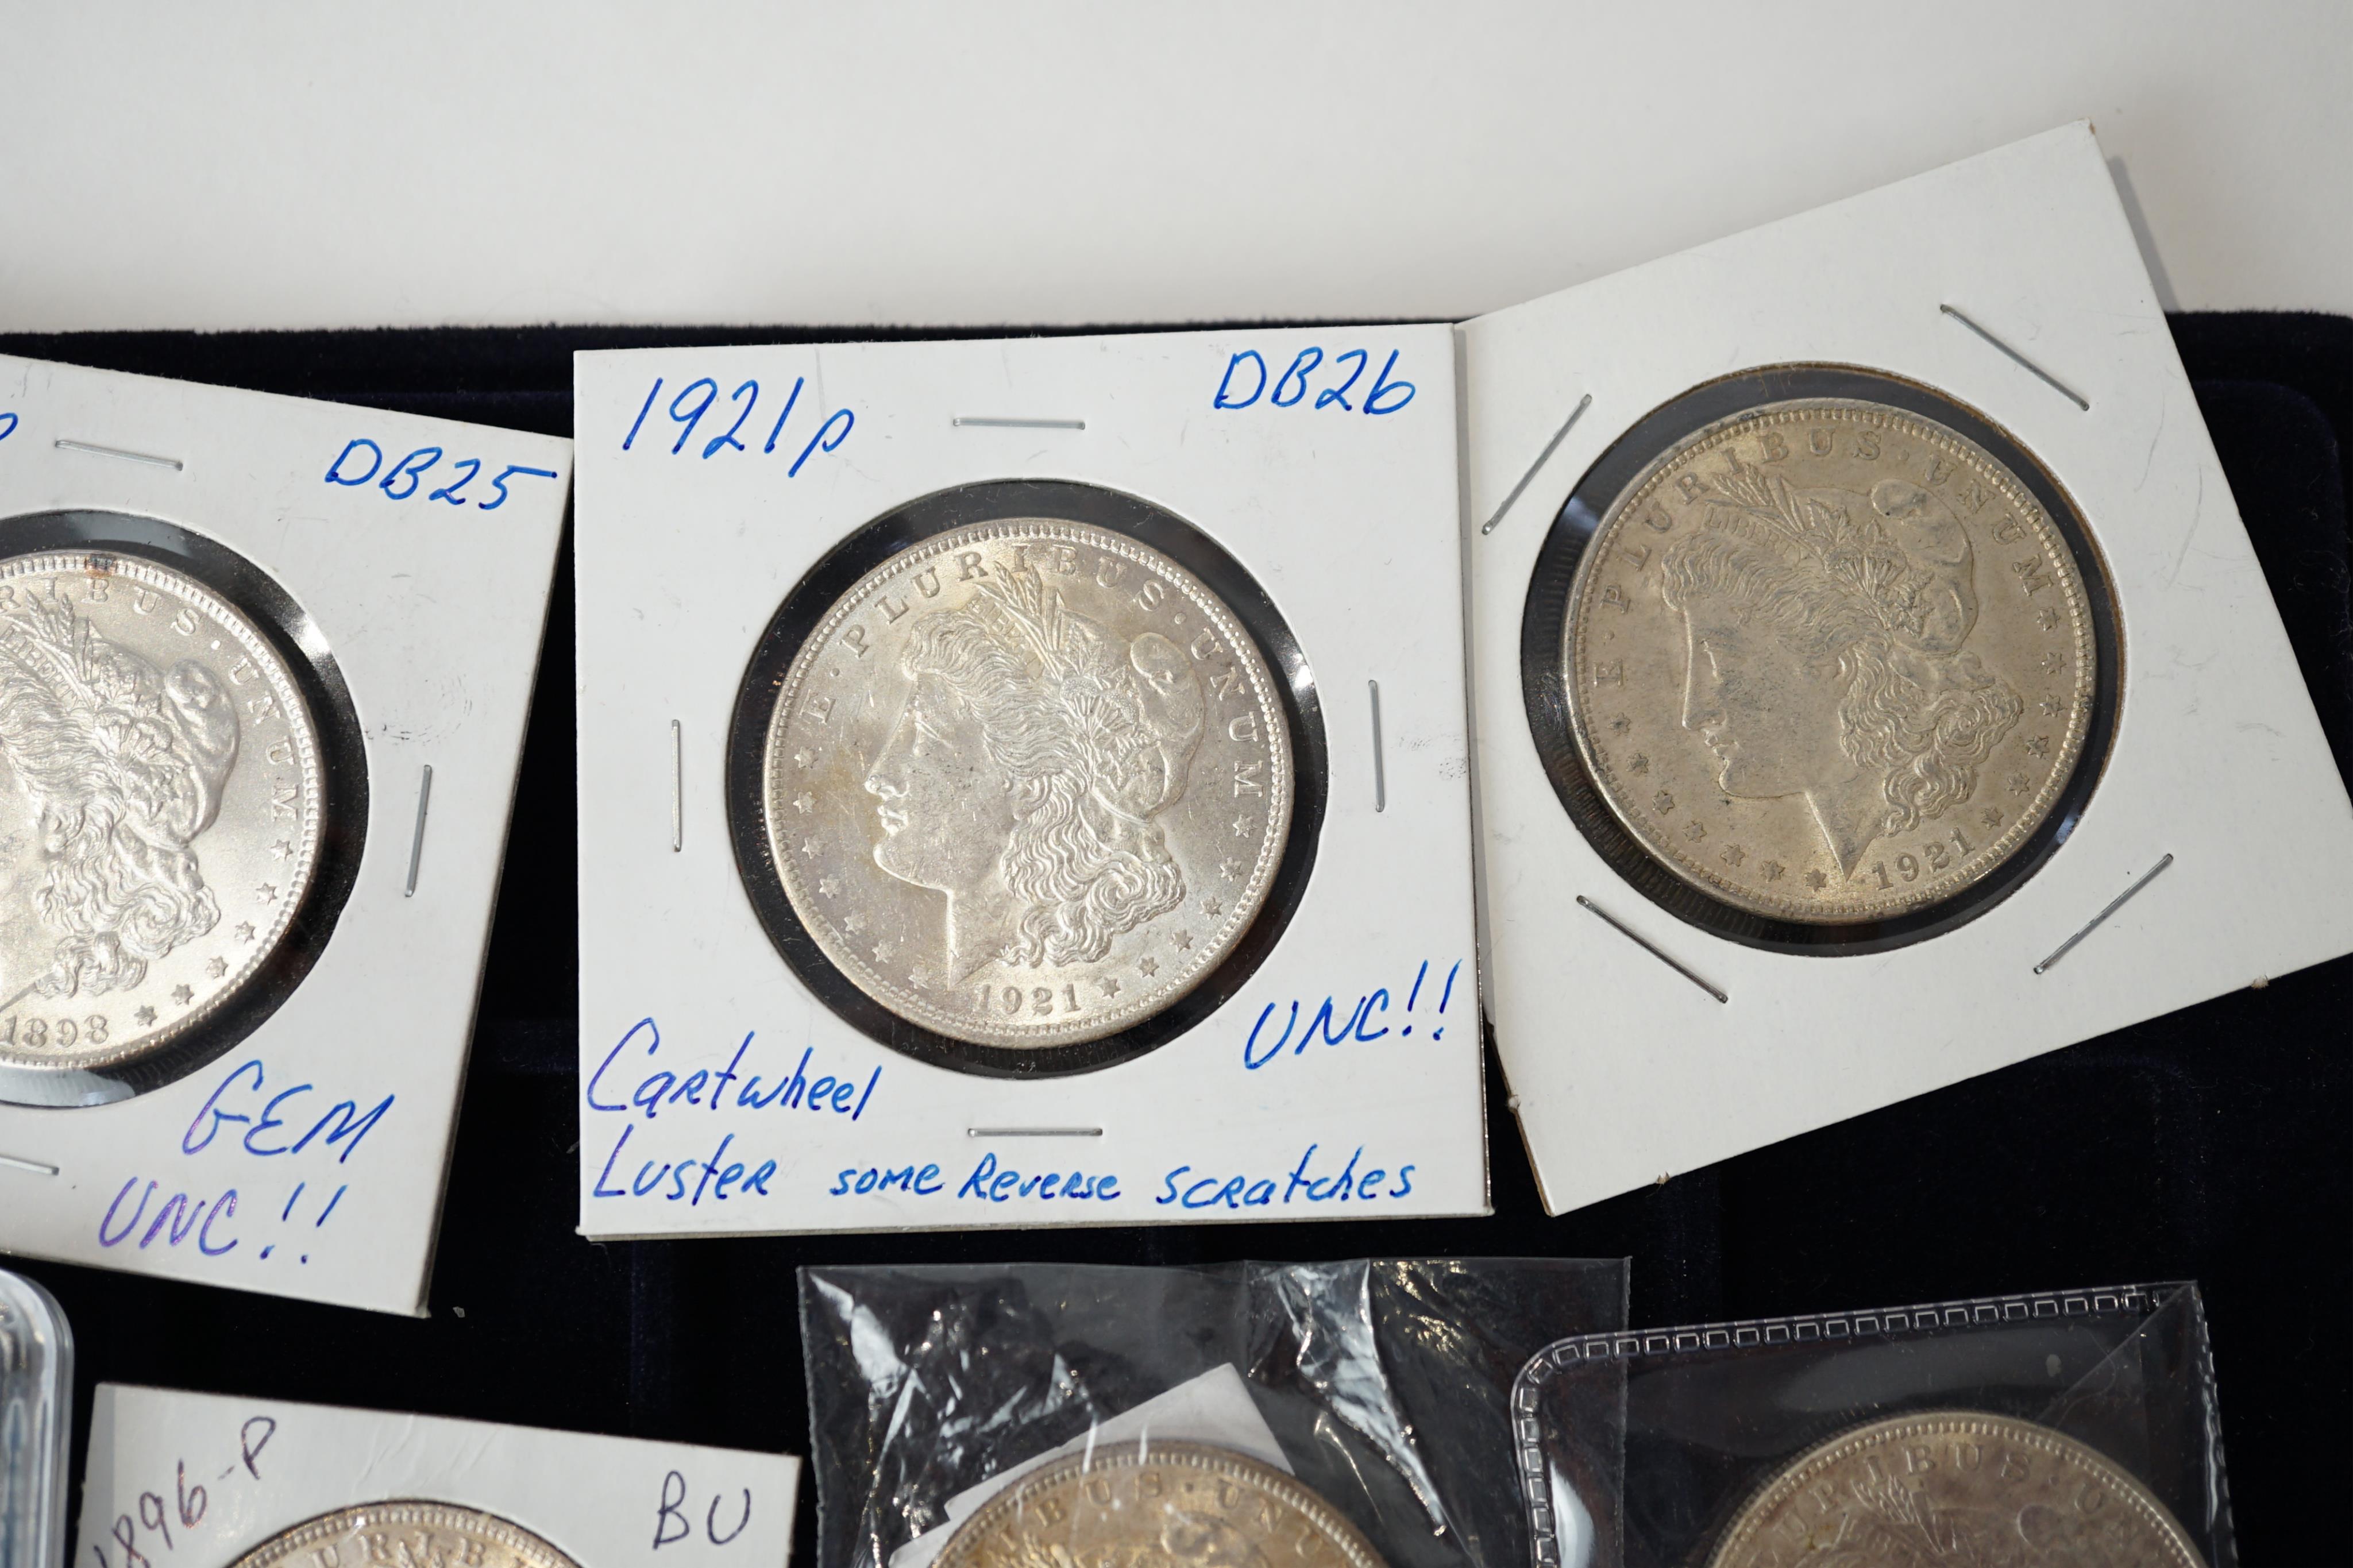 USA silver coins, 15 Morgan dollars; 1879, 1880, 1881, 1893 x 2, 1896, 1897, 1898 x 2, 1900, 1901 x 2, 1921 x 3, good VF to UNC